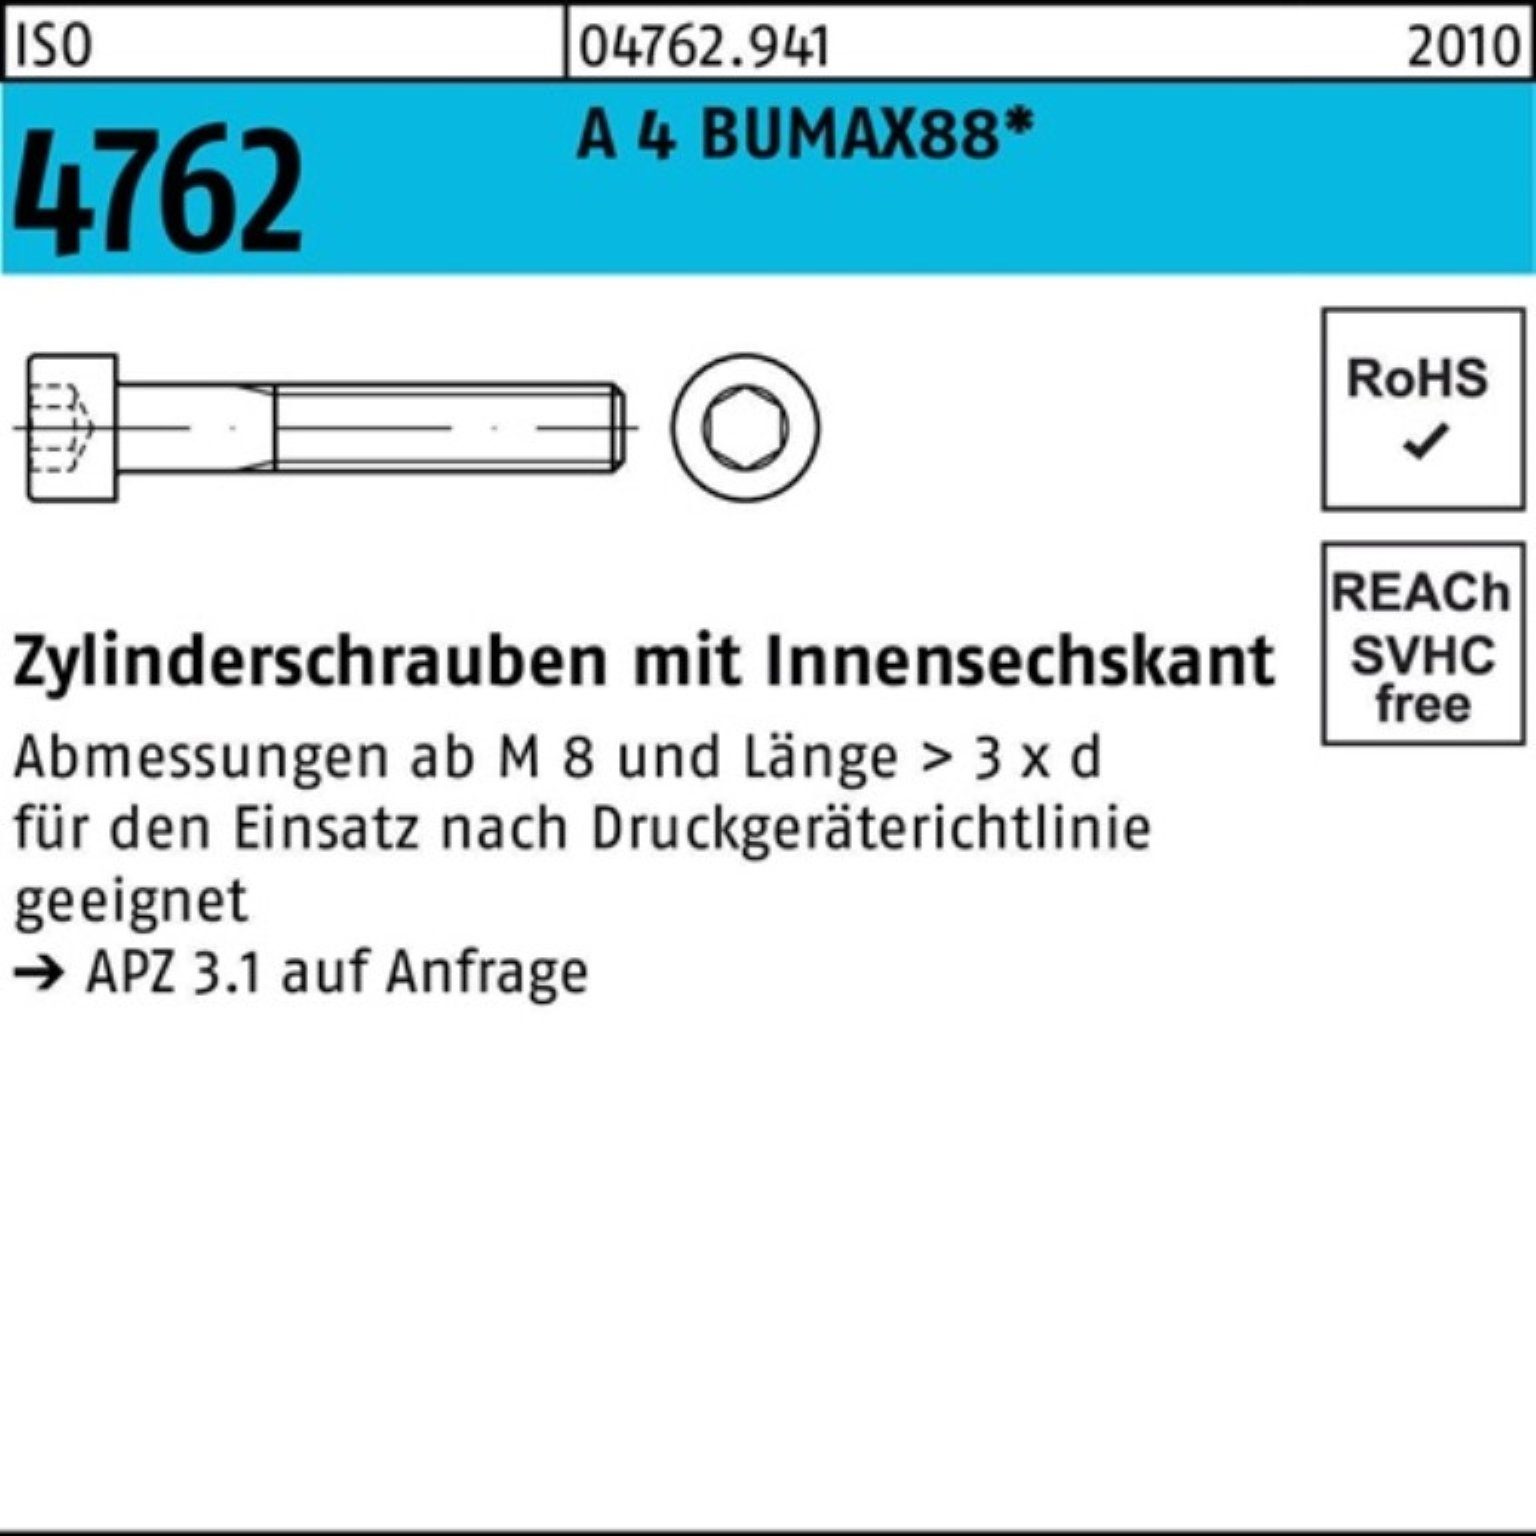 Bufab Zylinderschraube 200er Pack A Innen-6kt 12 ISO M4x 4762 BUMAX88 Zylinderschraube 4 200